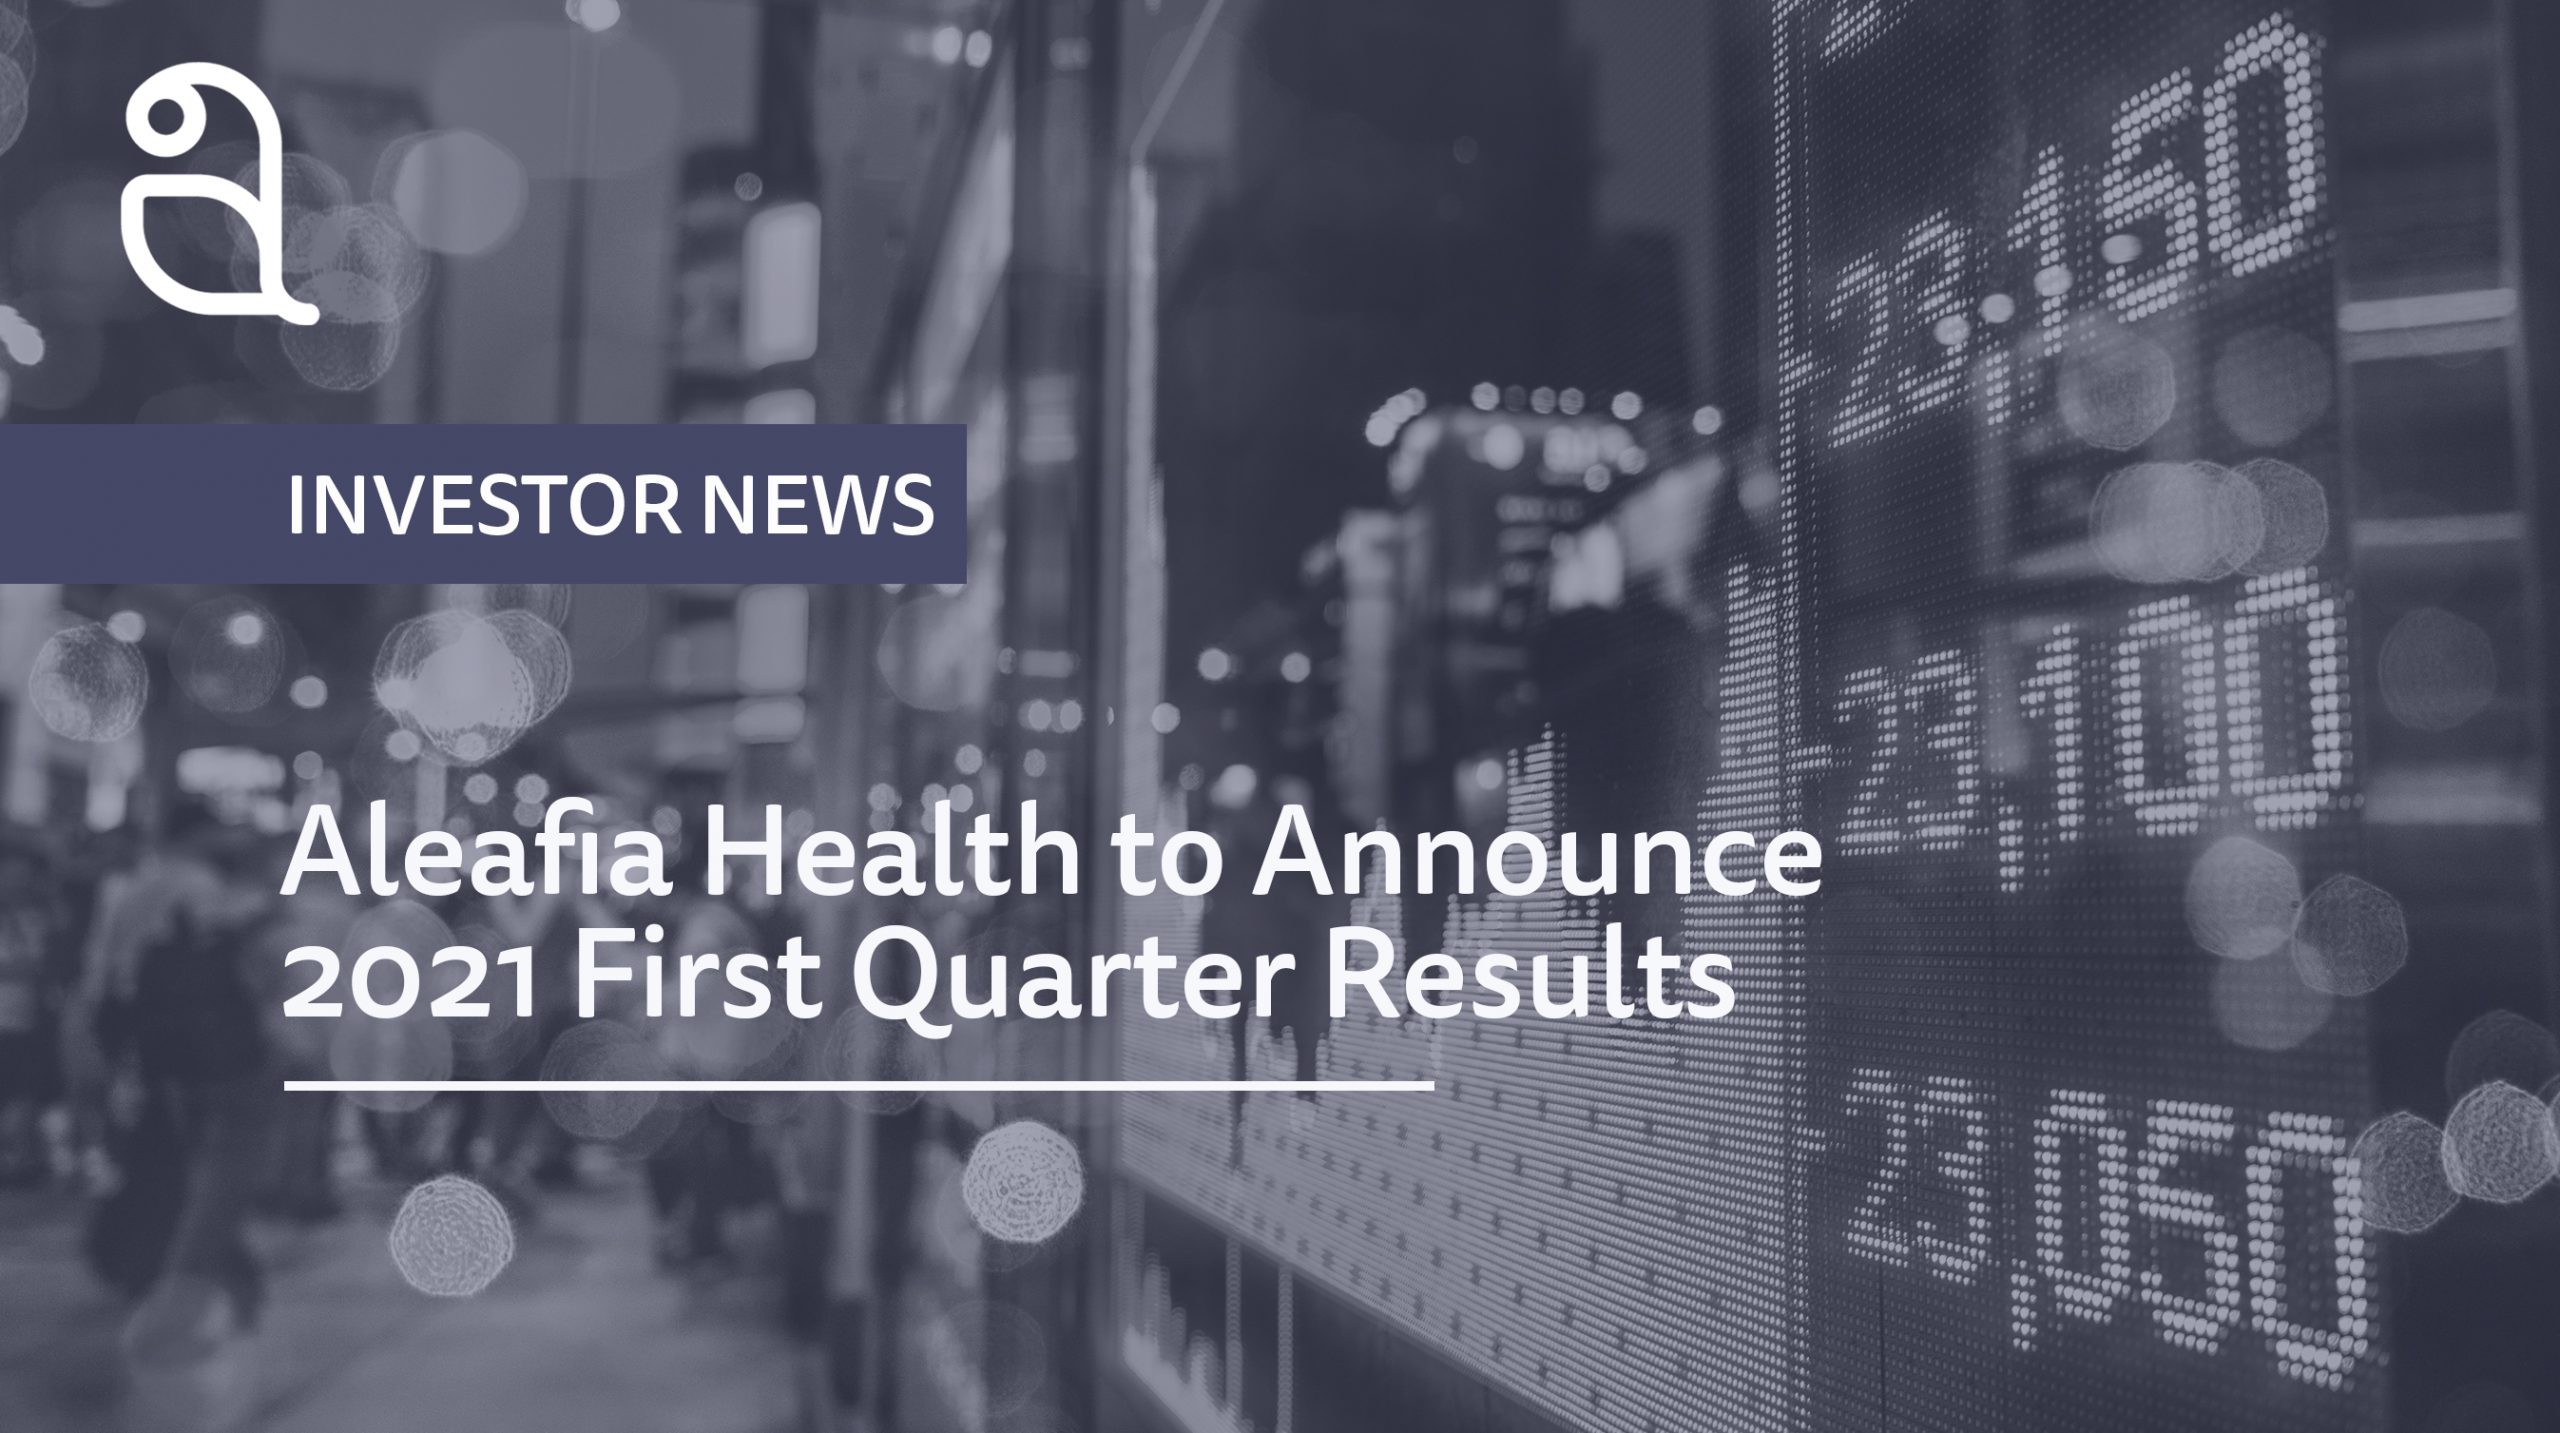 Aleafia Health to Announce 2021 First Quarter Results